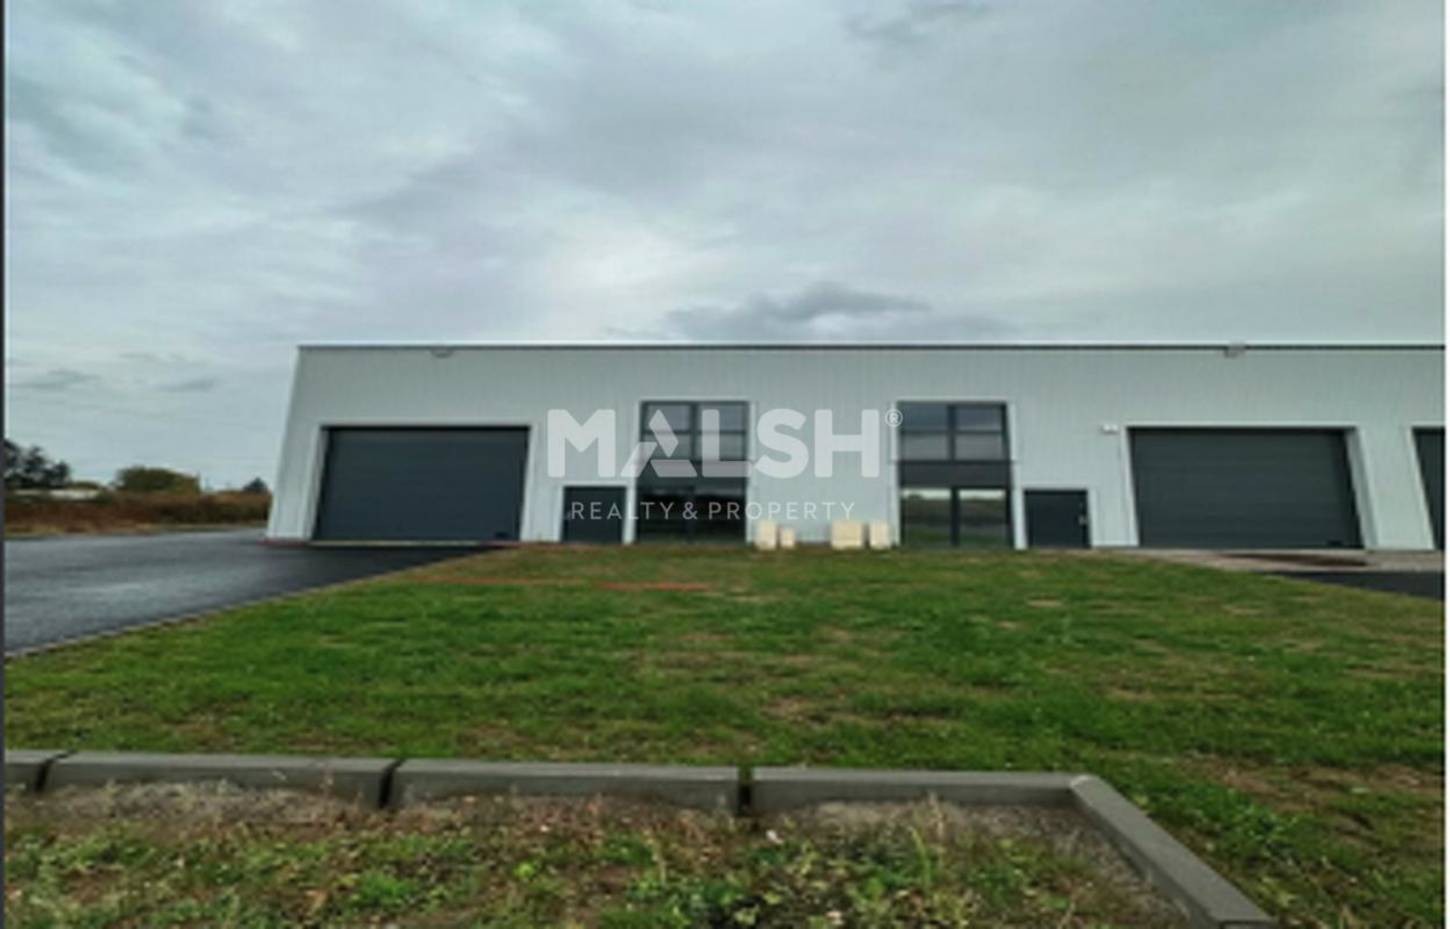 MALSH Realty & Property - Activité - Lyon EST (St Priest /Mi Plaine/ A43 / Eurexpo) - Tignieu-Jameyzieu - 2